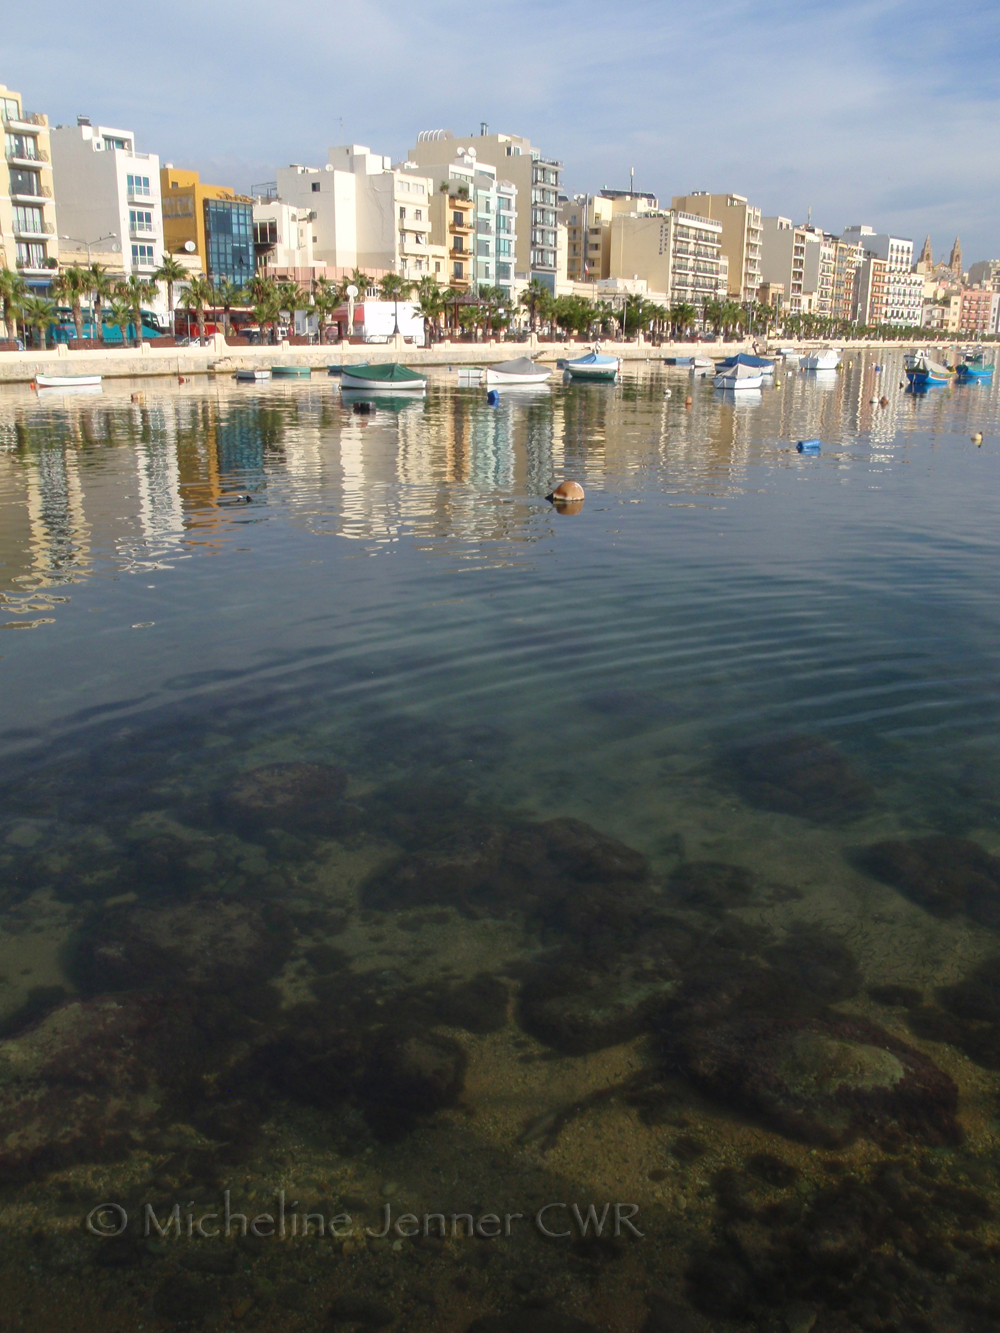 Waterfront suburb of Silema, Malta.